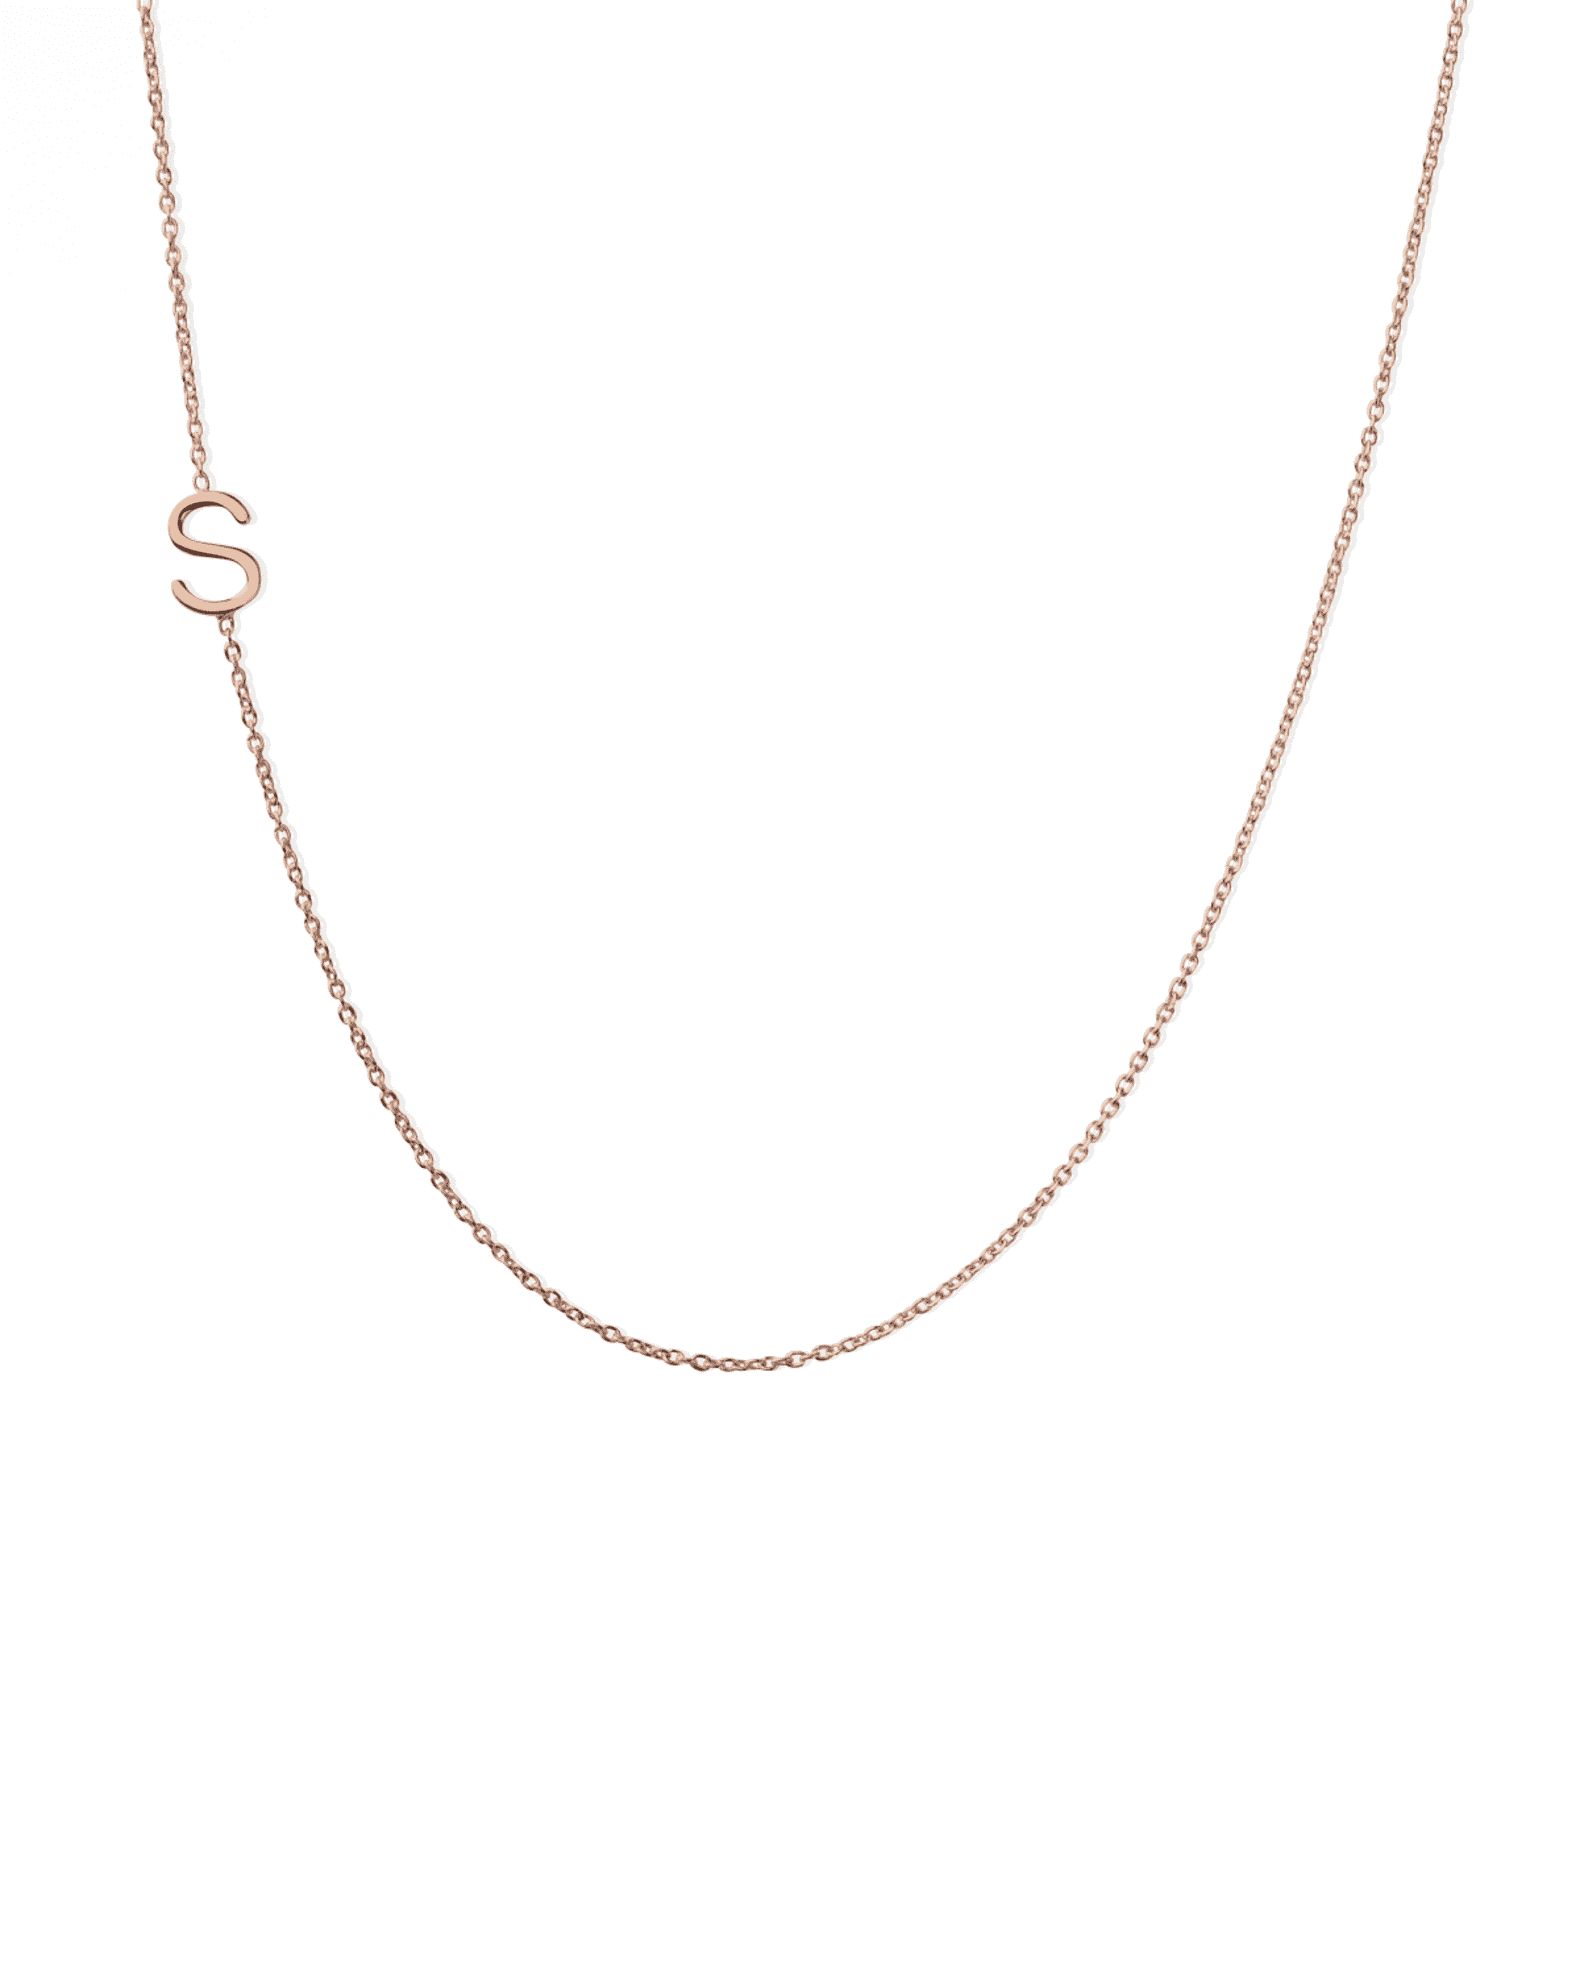 Maya Brenner Designs 14k Rose Gold Mini Letter Necklace | Neiman Marcus